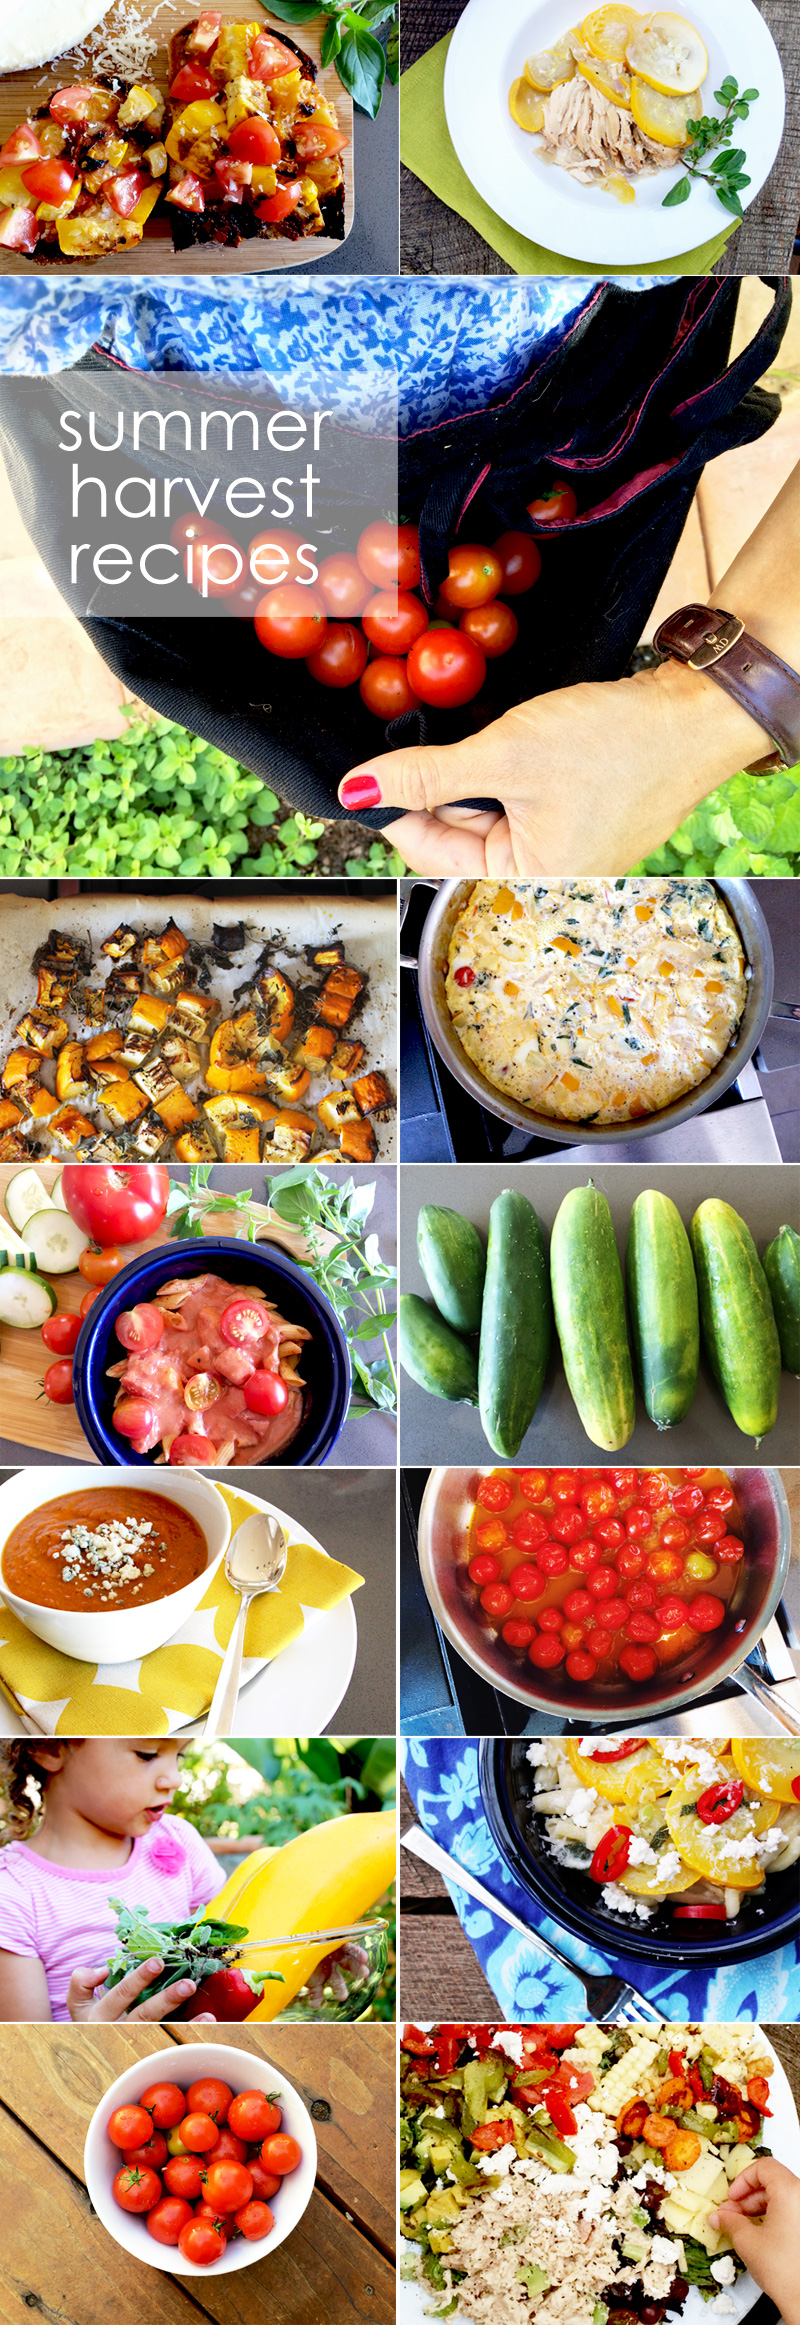 Summer Harvest Recipes | PepperDesignBlog.com